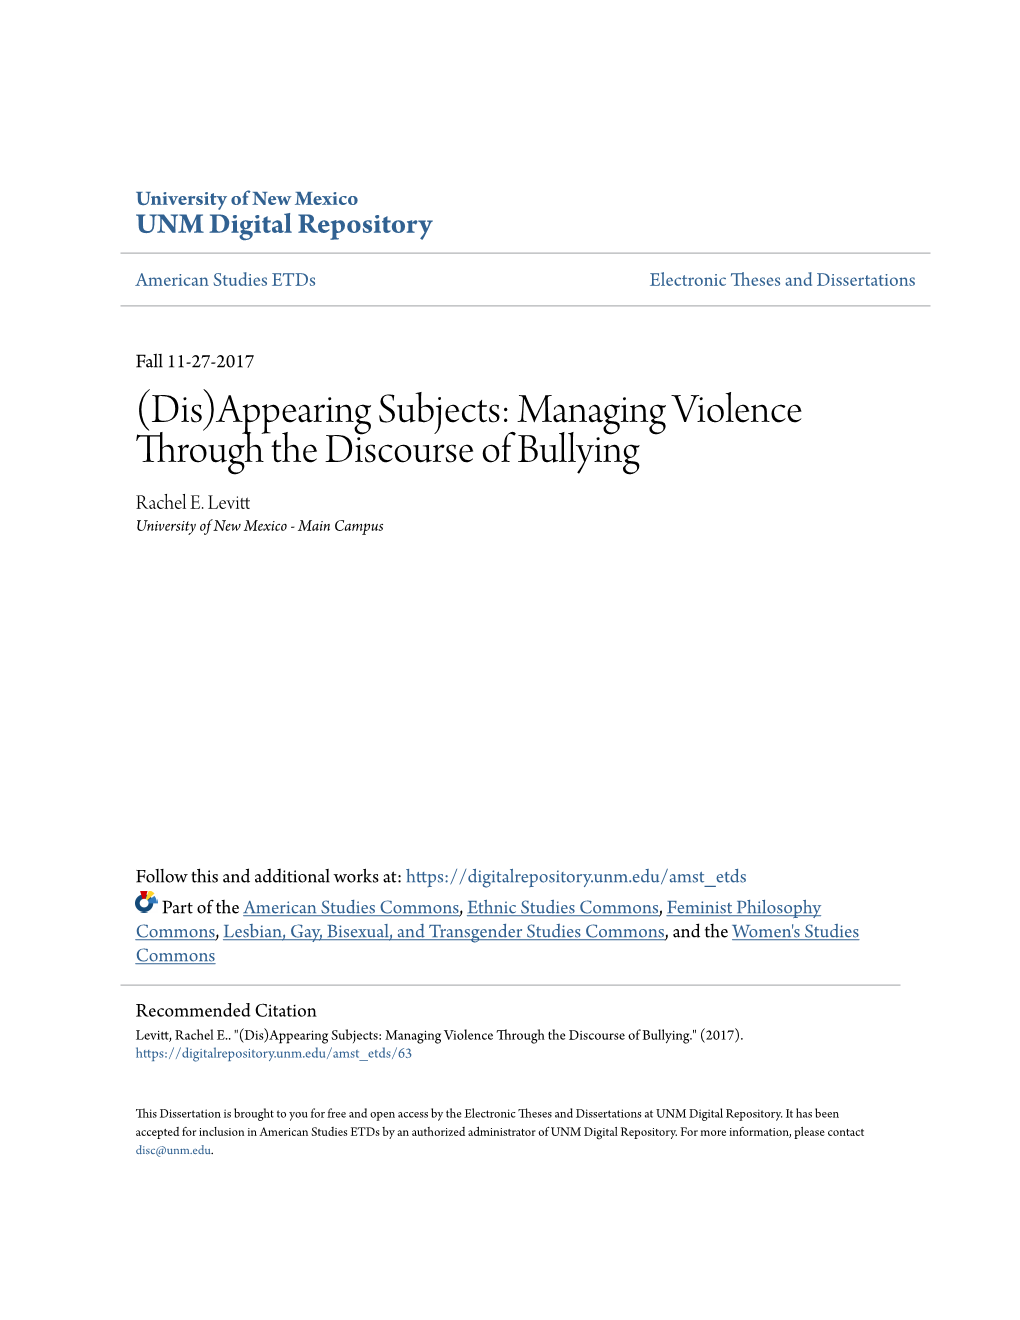 Managing Violence Through the Discourse of Bullying Rachel E